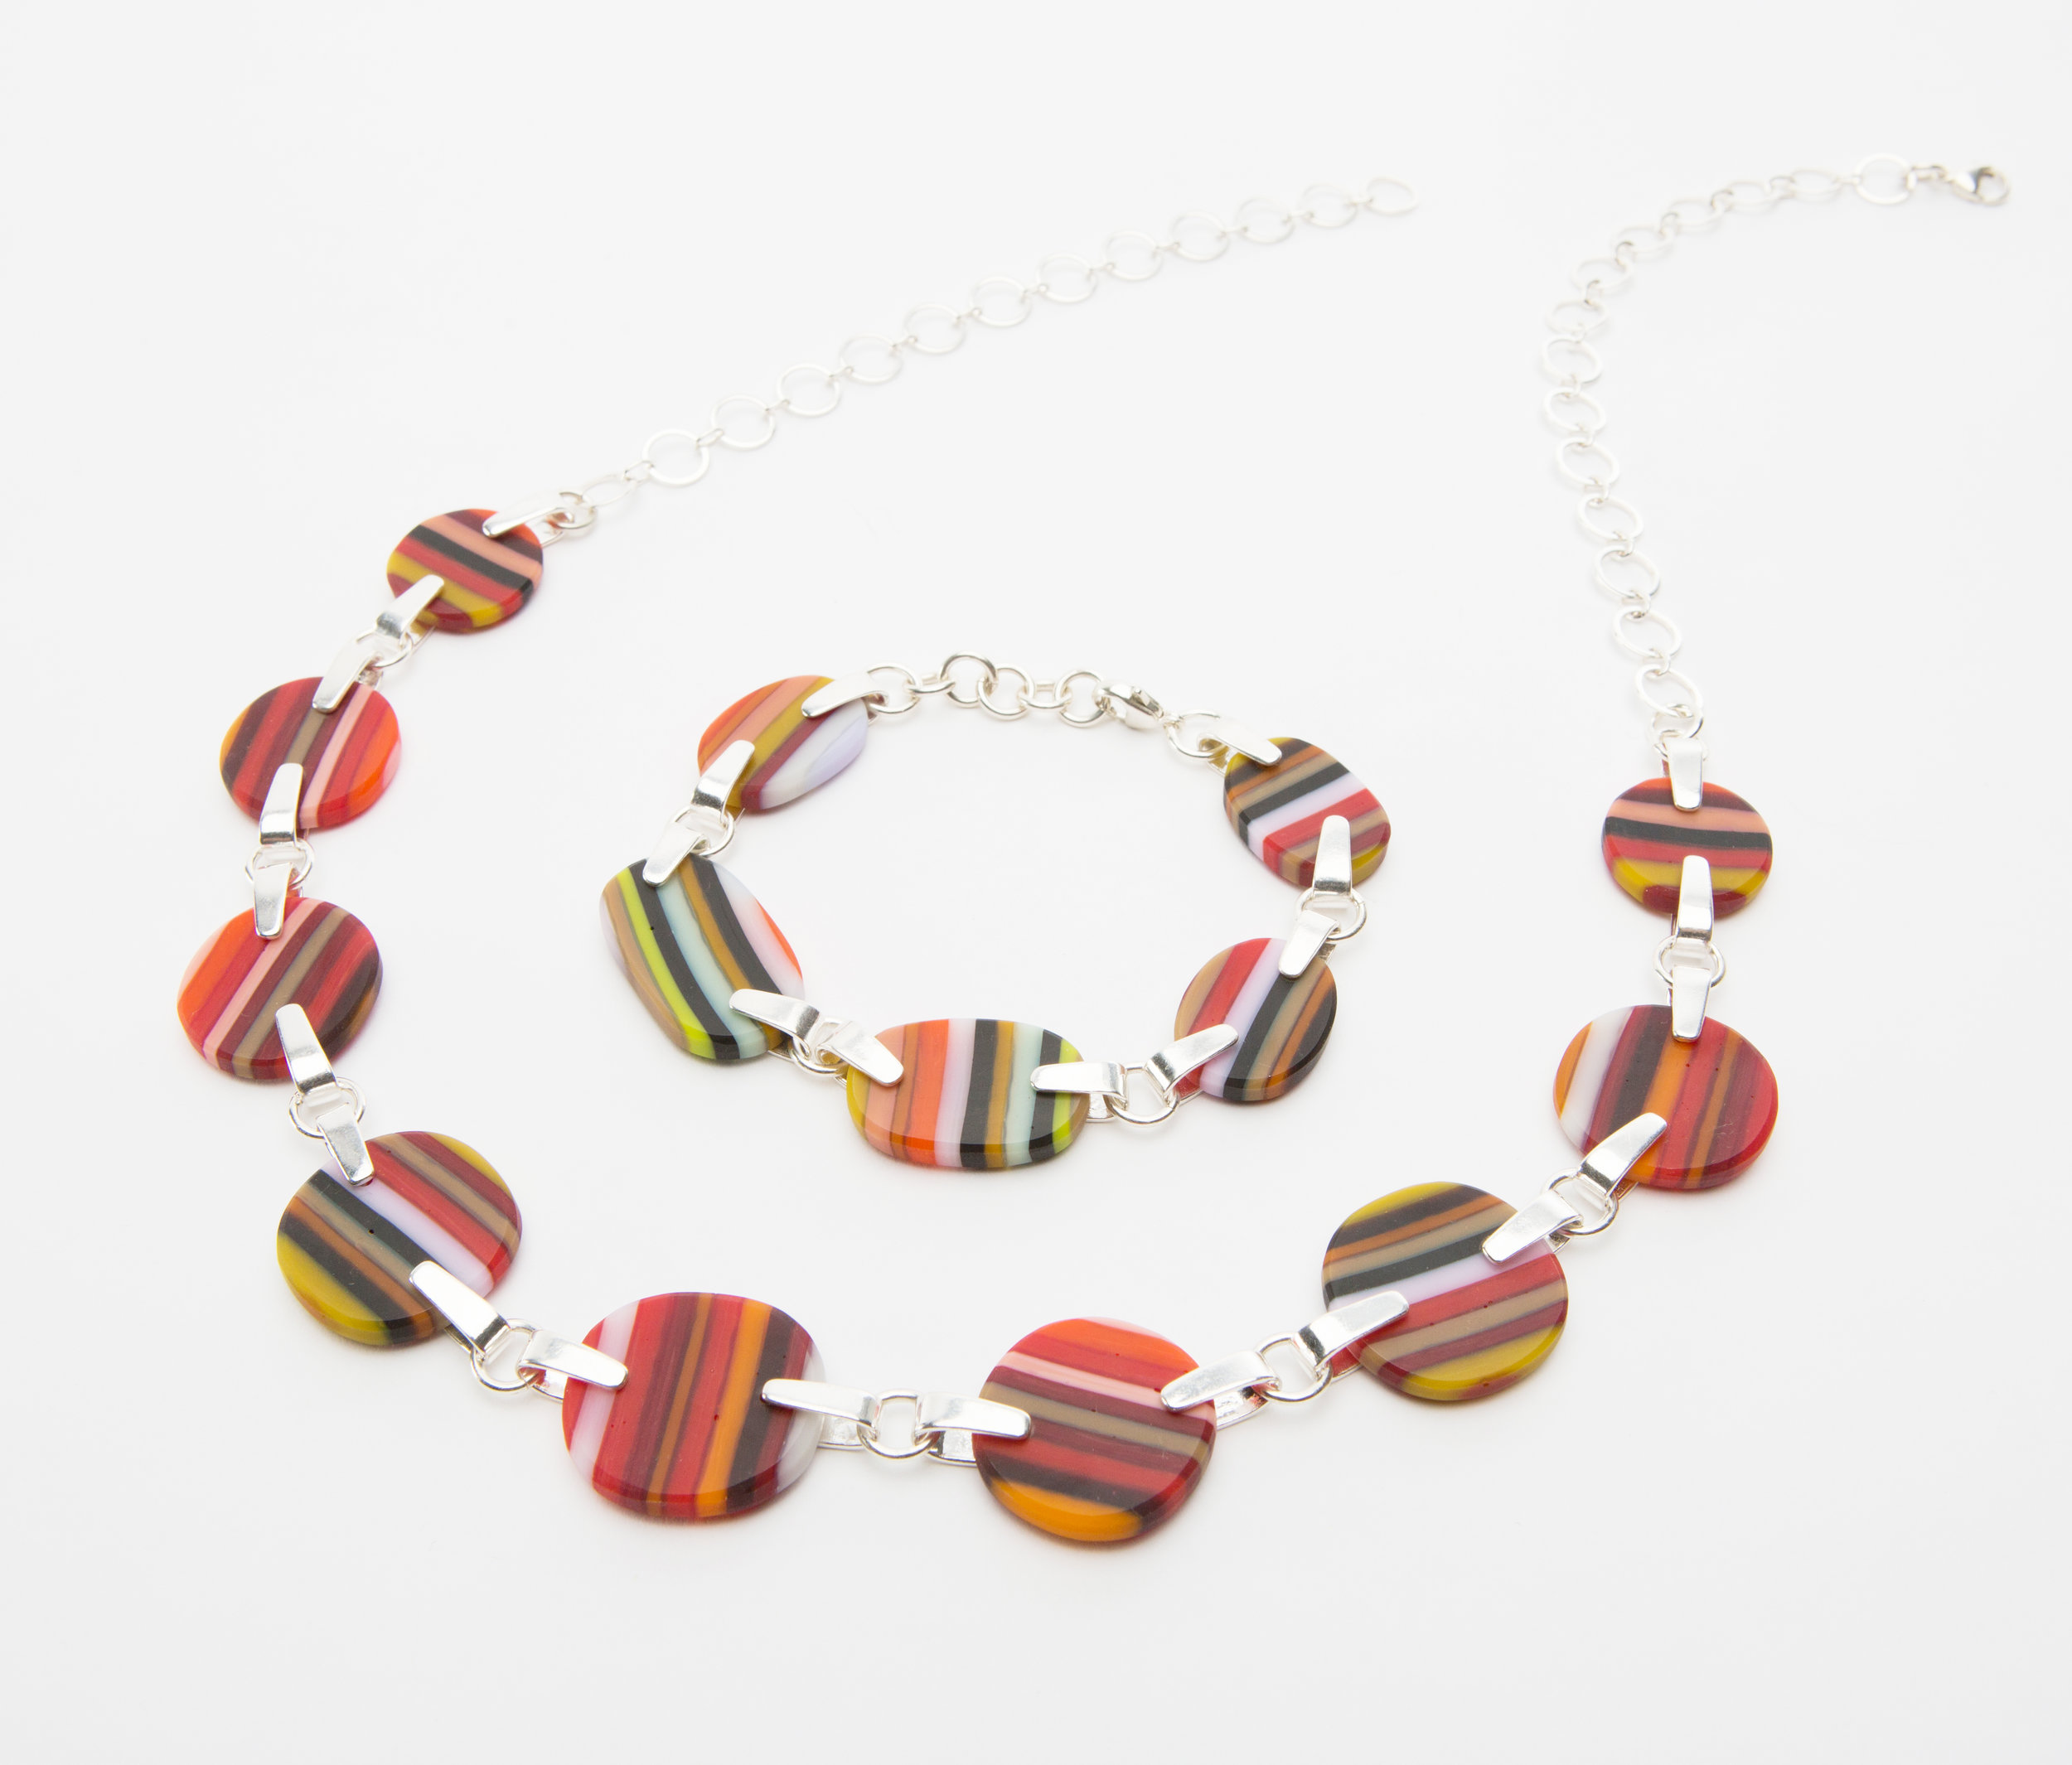 Carved Stripes, necklace and bracelet, 2016